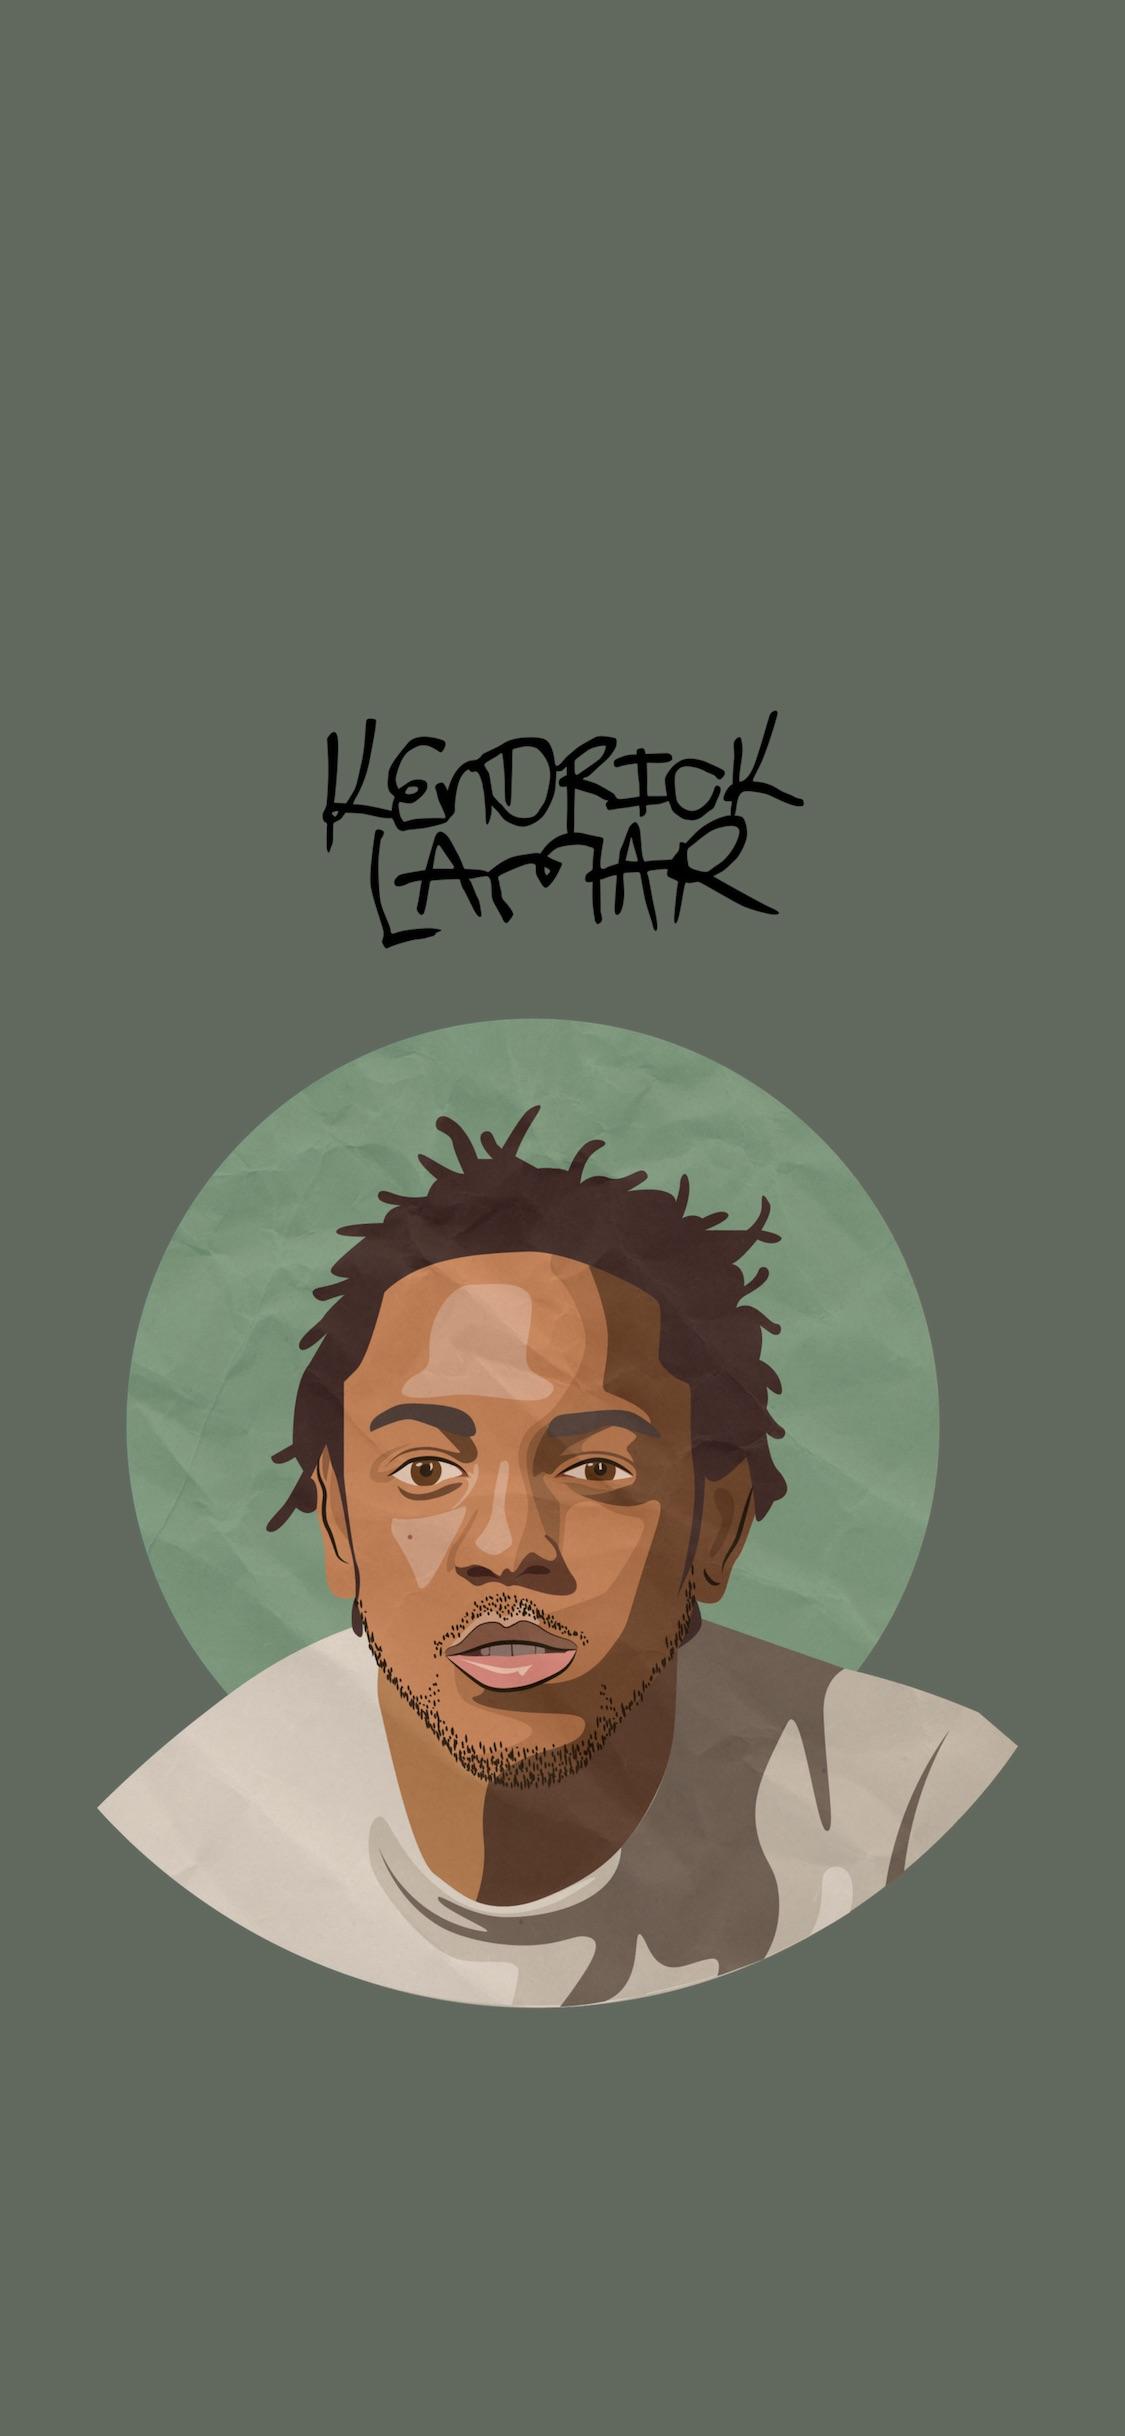 Kendrick Lamar Iphone Wallpapers On Wallpaperdog